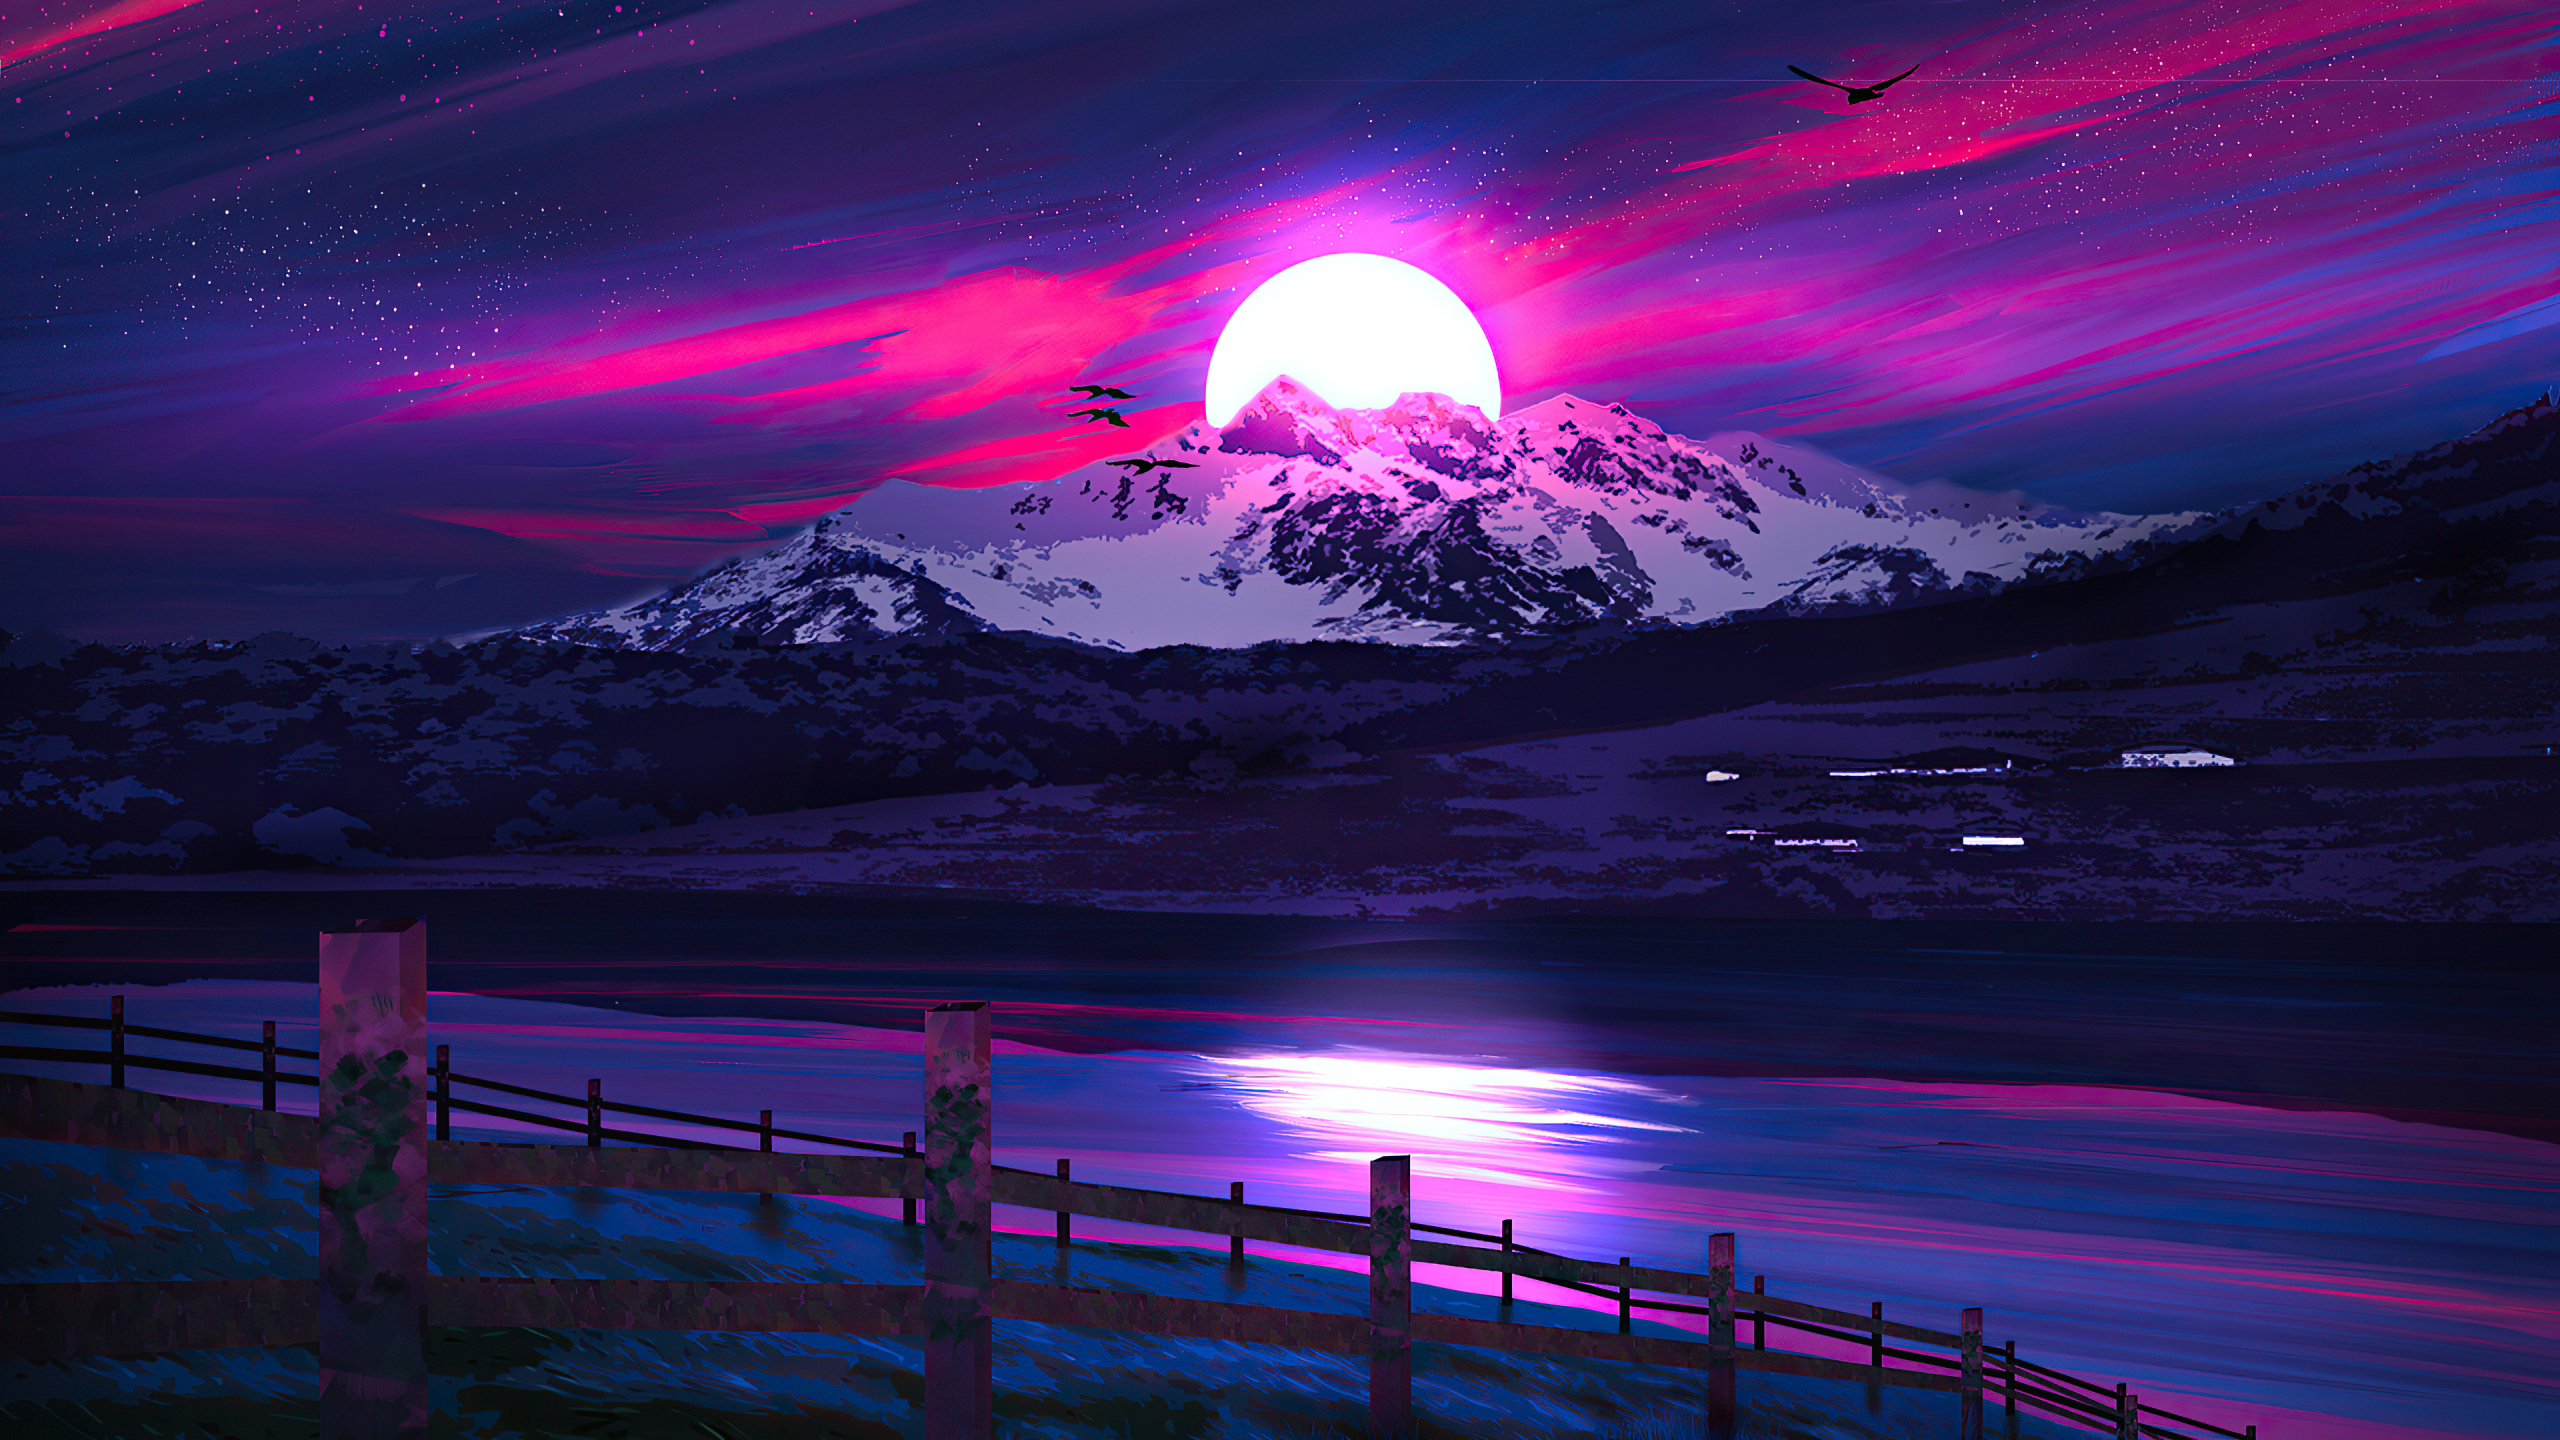 2560x1440 Resolution Mountains Sunrise Nepal Illustration 1440p